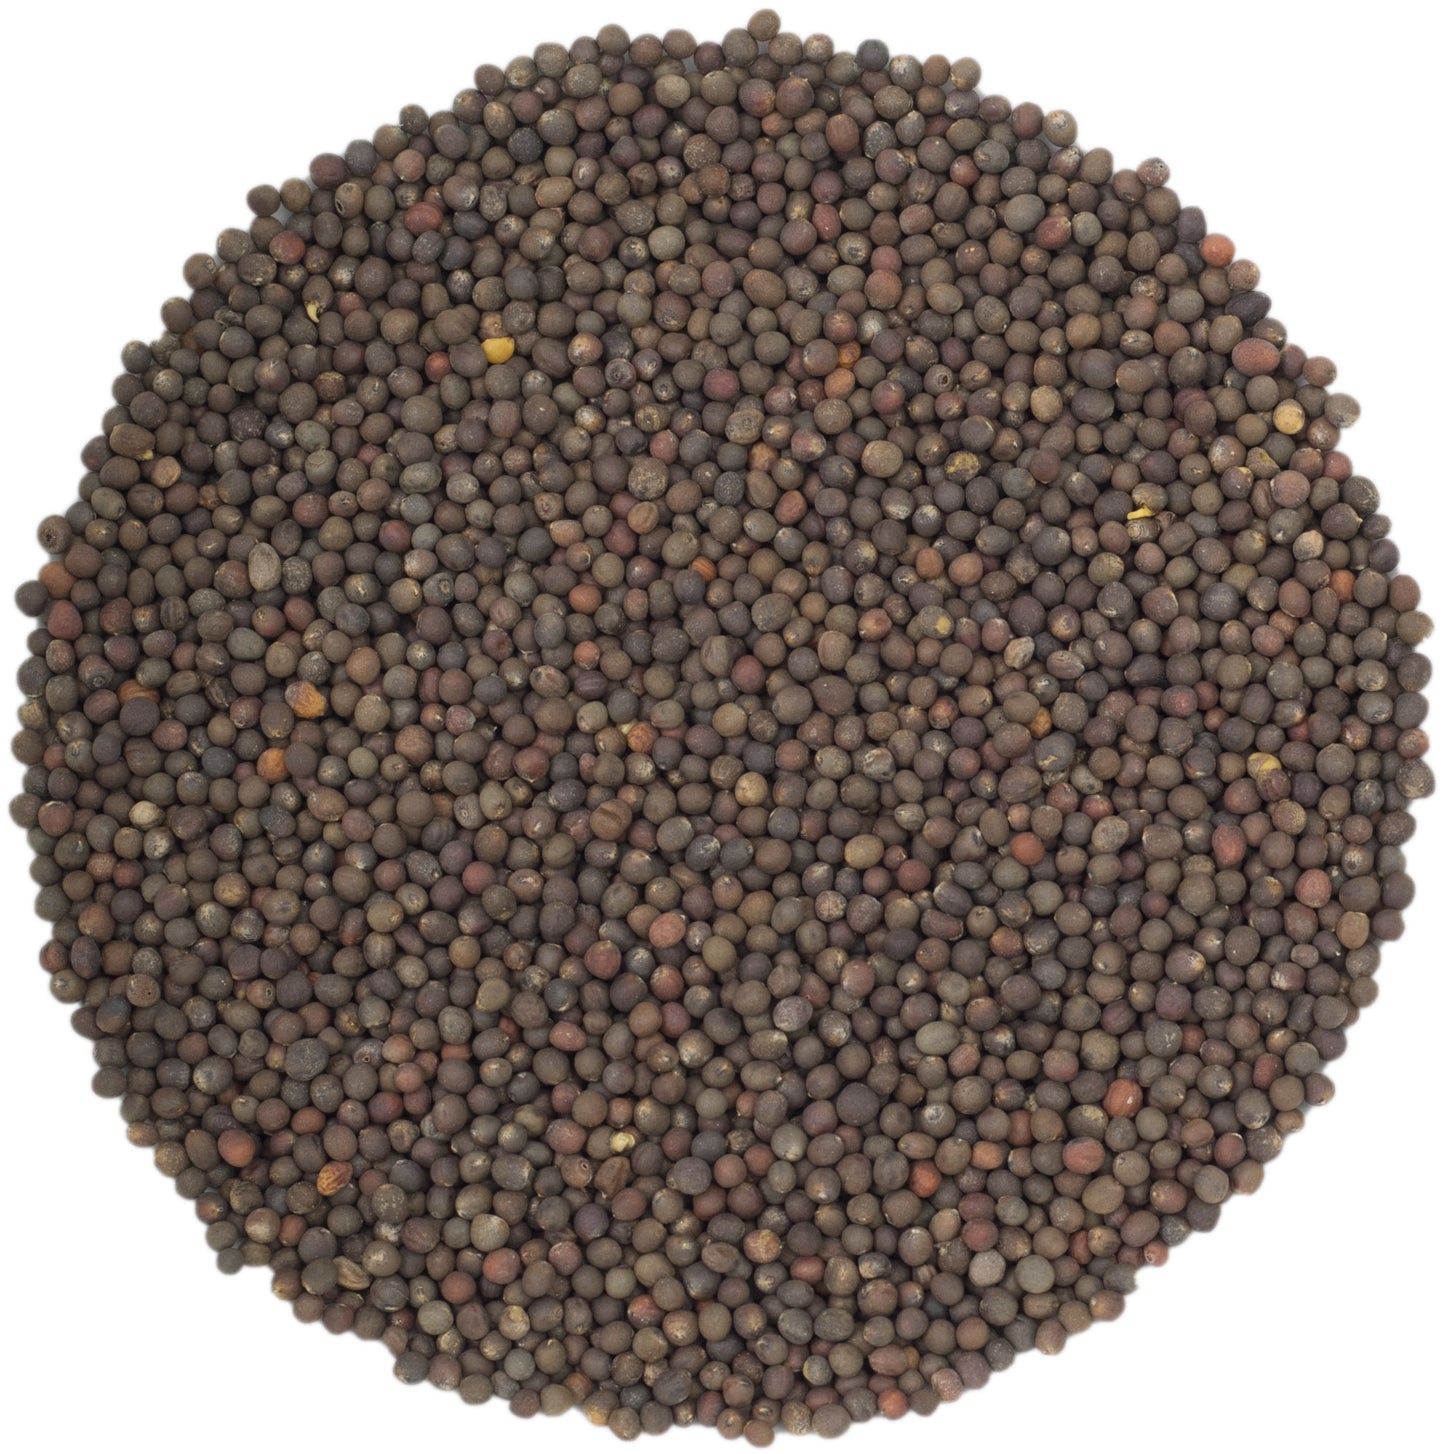 microgreen refill portion | organic sprouting seed and natural hemp grow mat